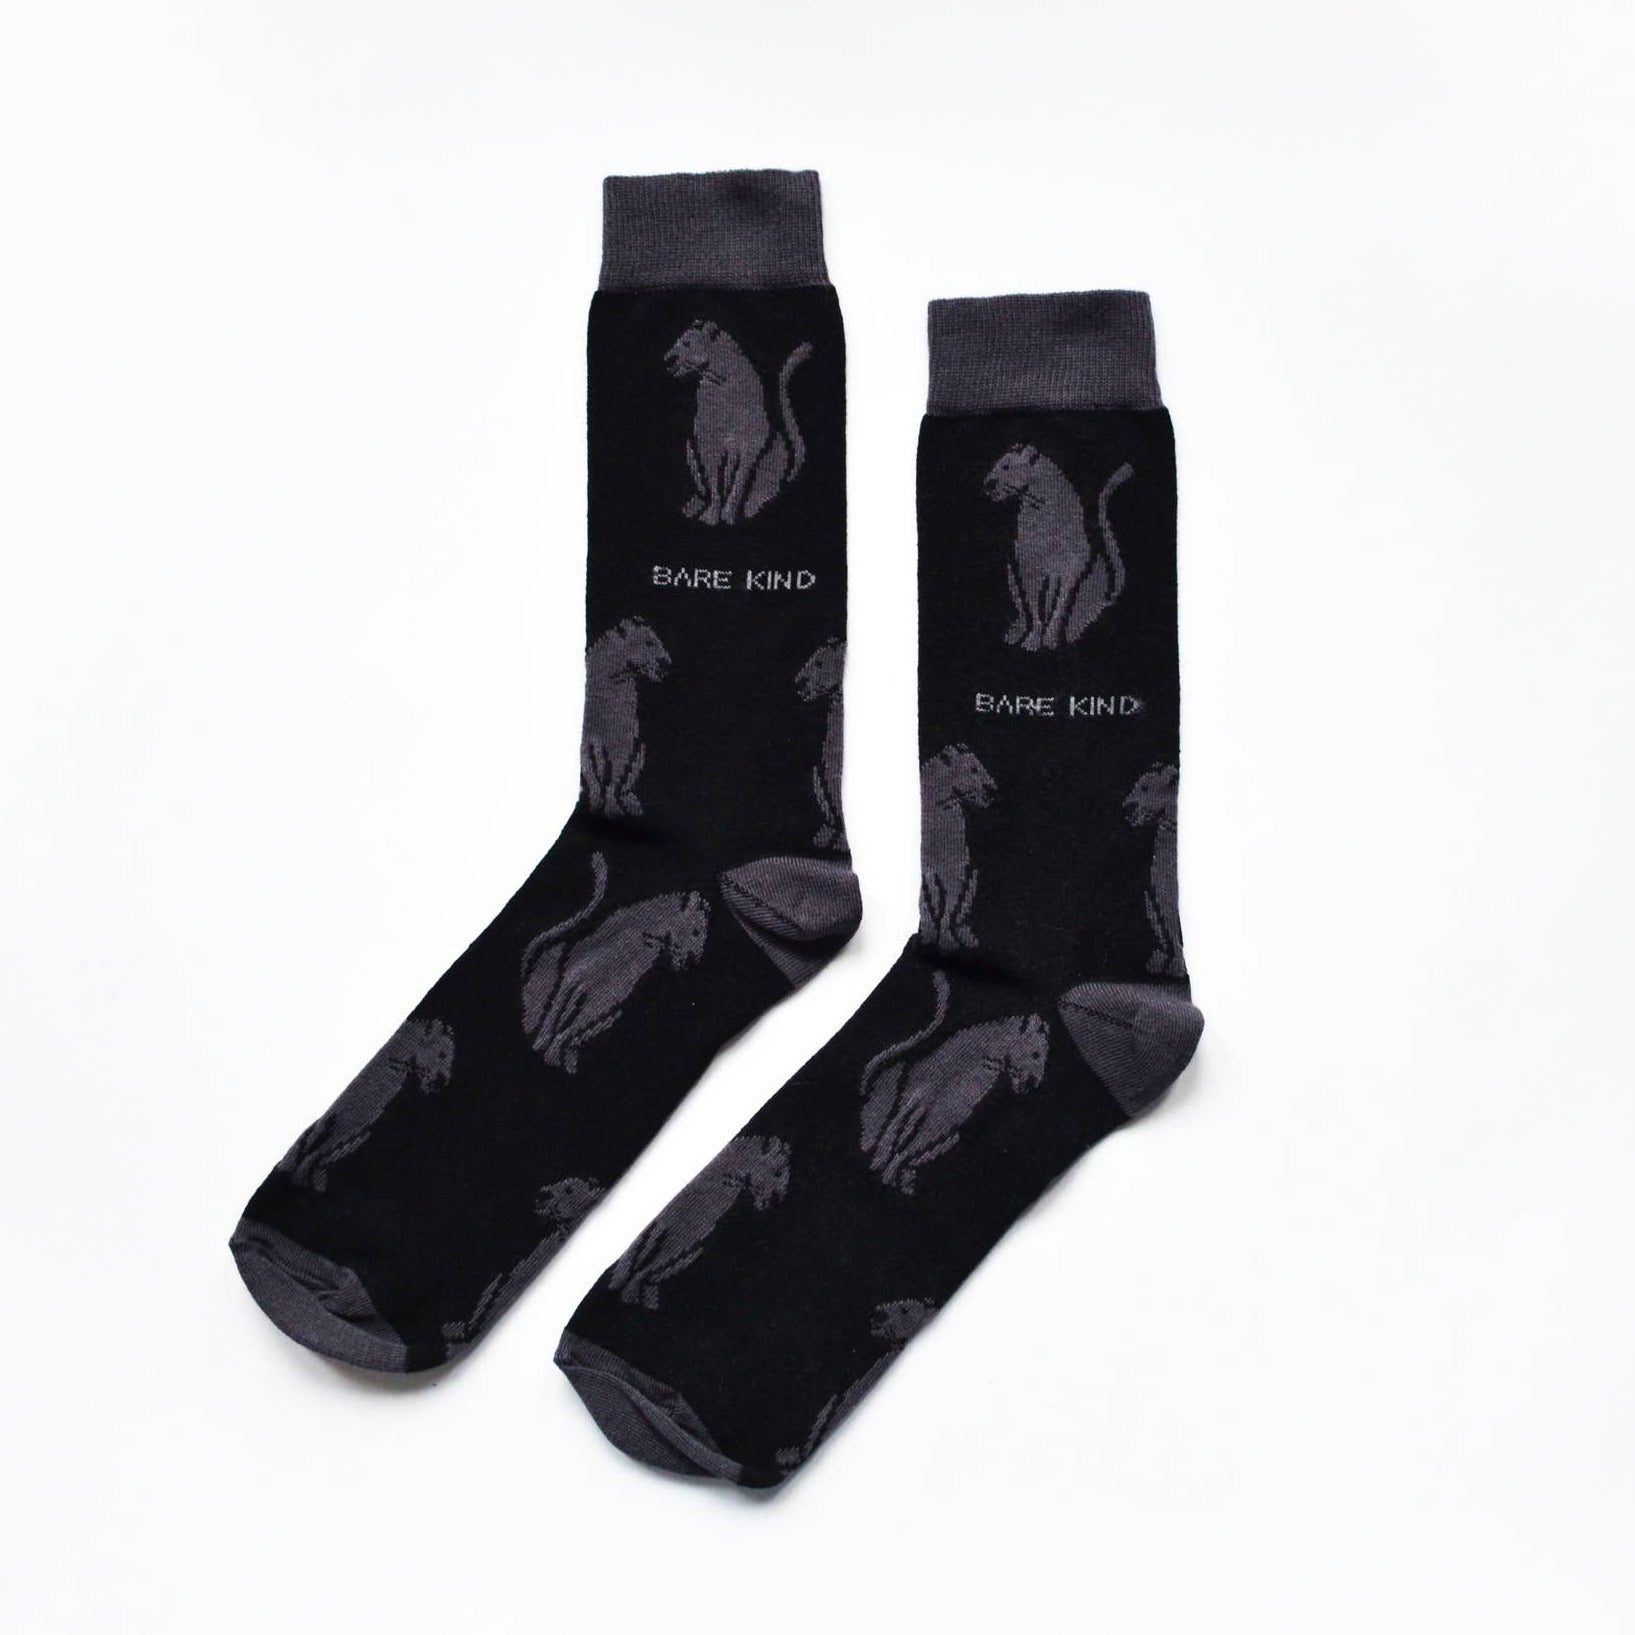 Bare Kind Socks, Black Panther Bamboo Socks - Black Single Pair